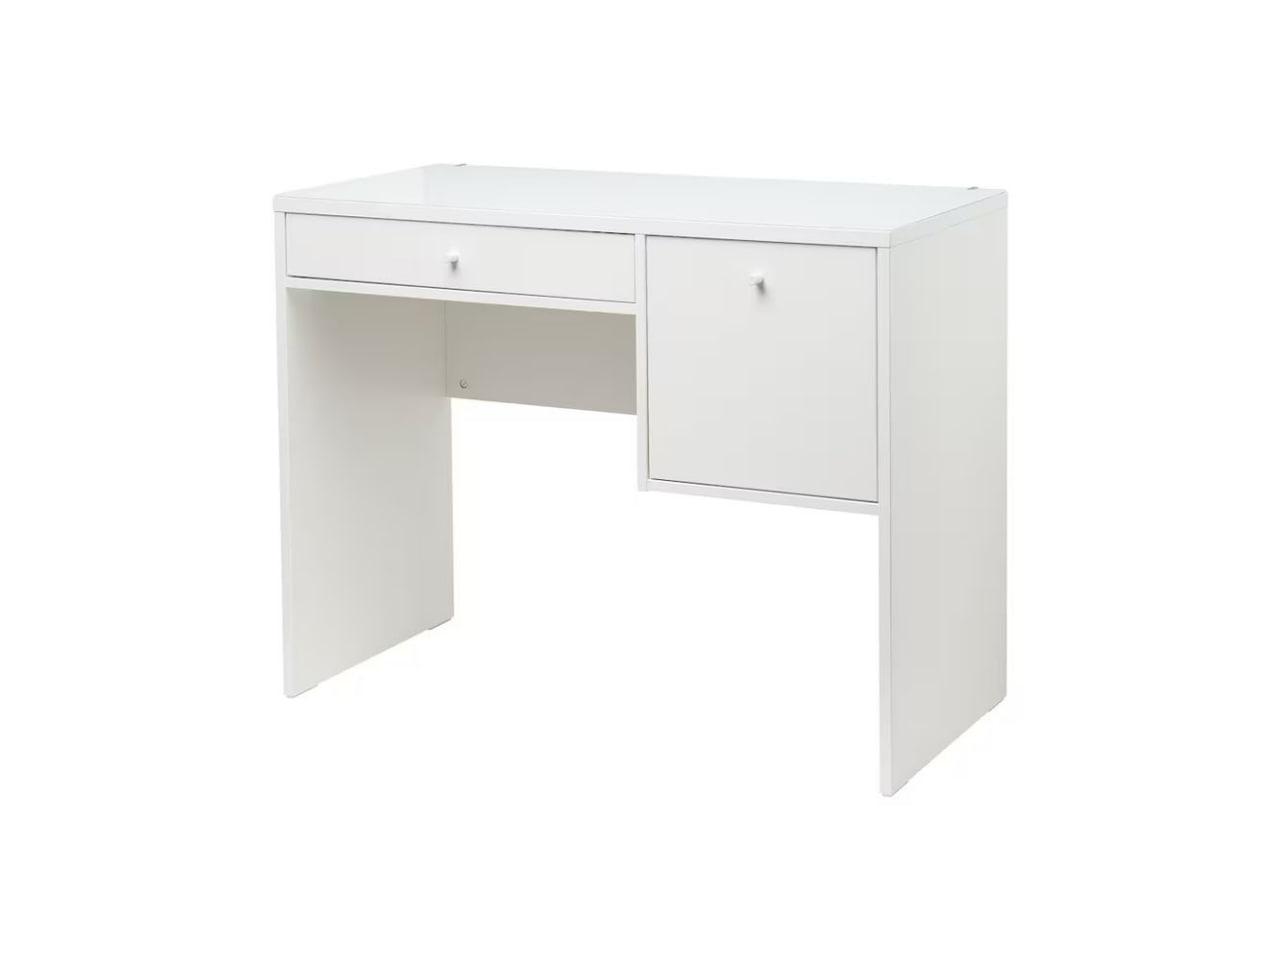 Туалетный столик Сувде 113 white ИКЕА (IKEA)  изображение товара